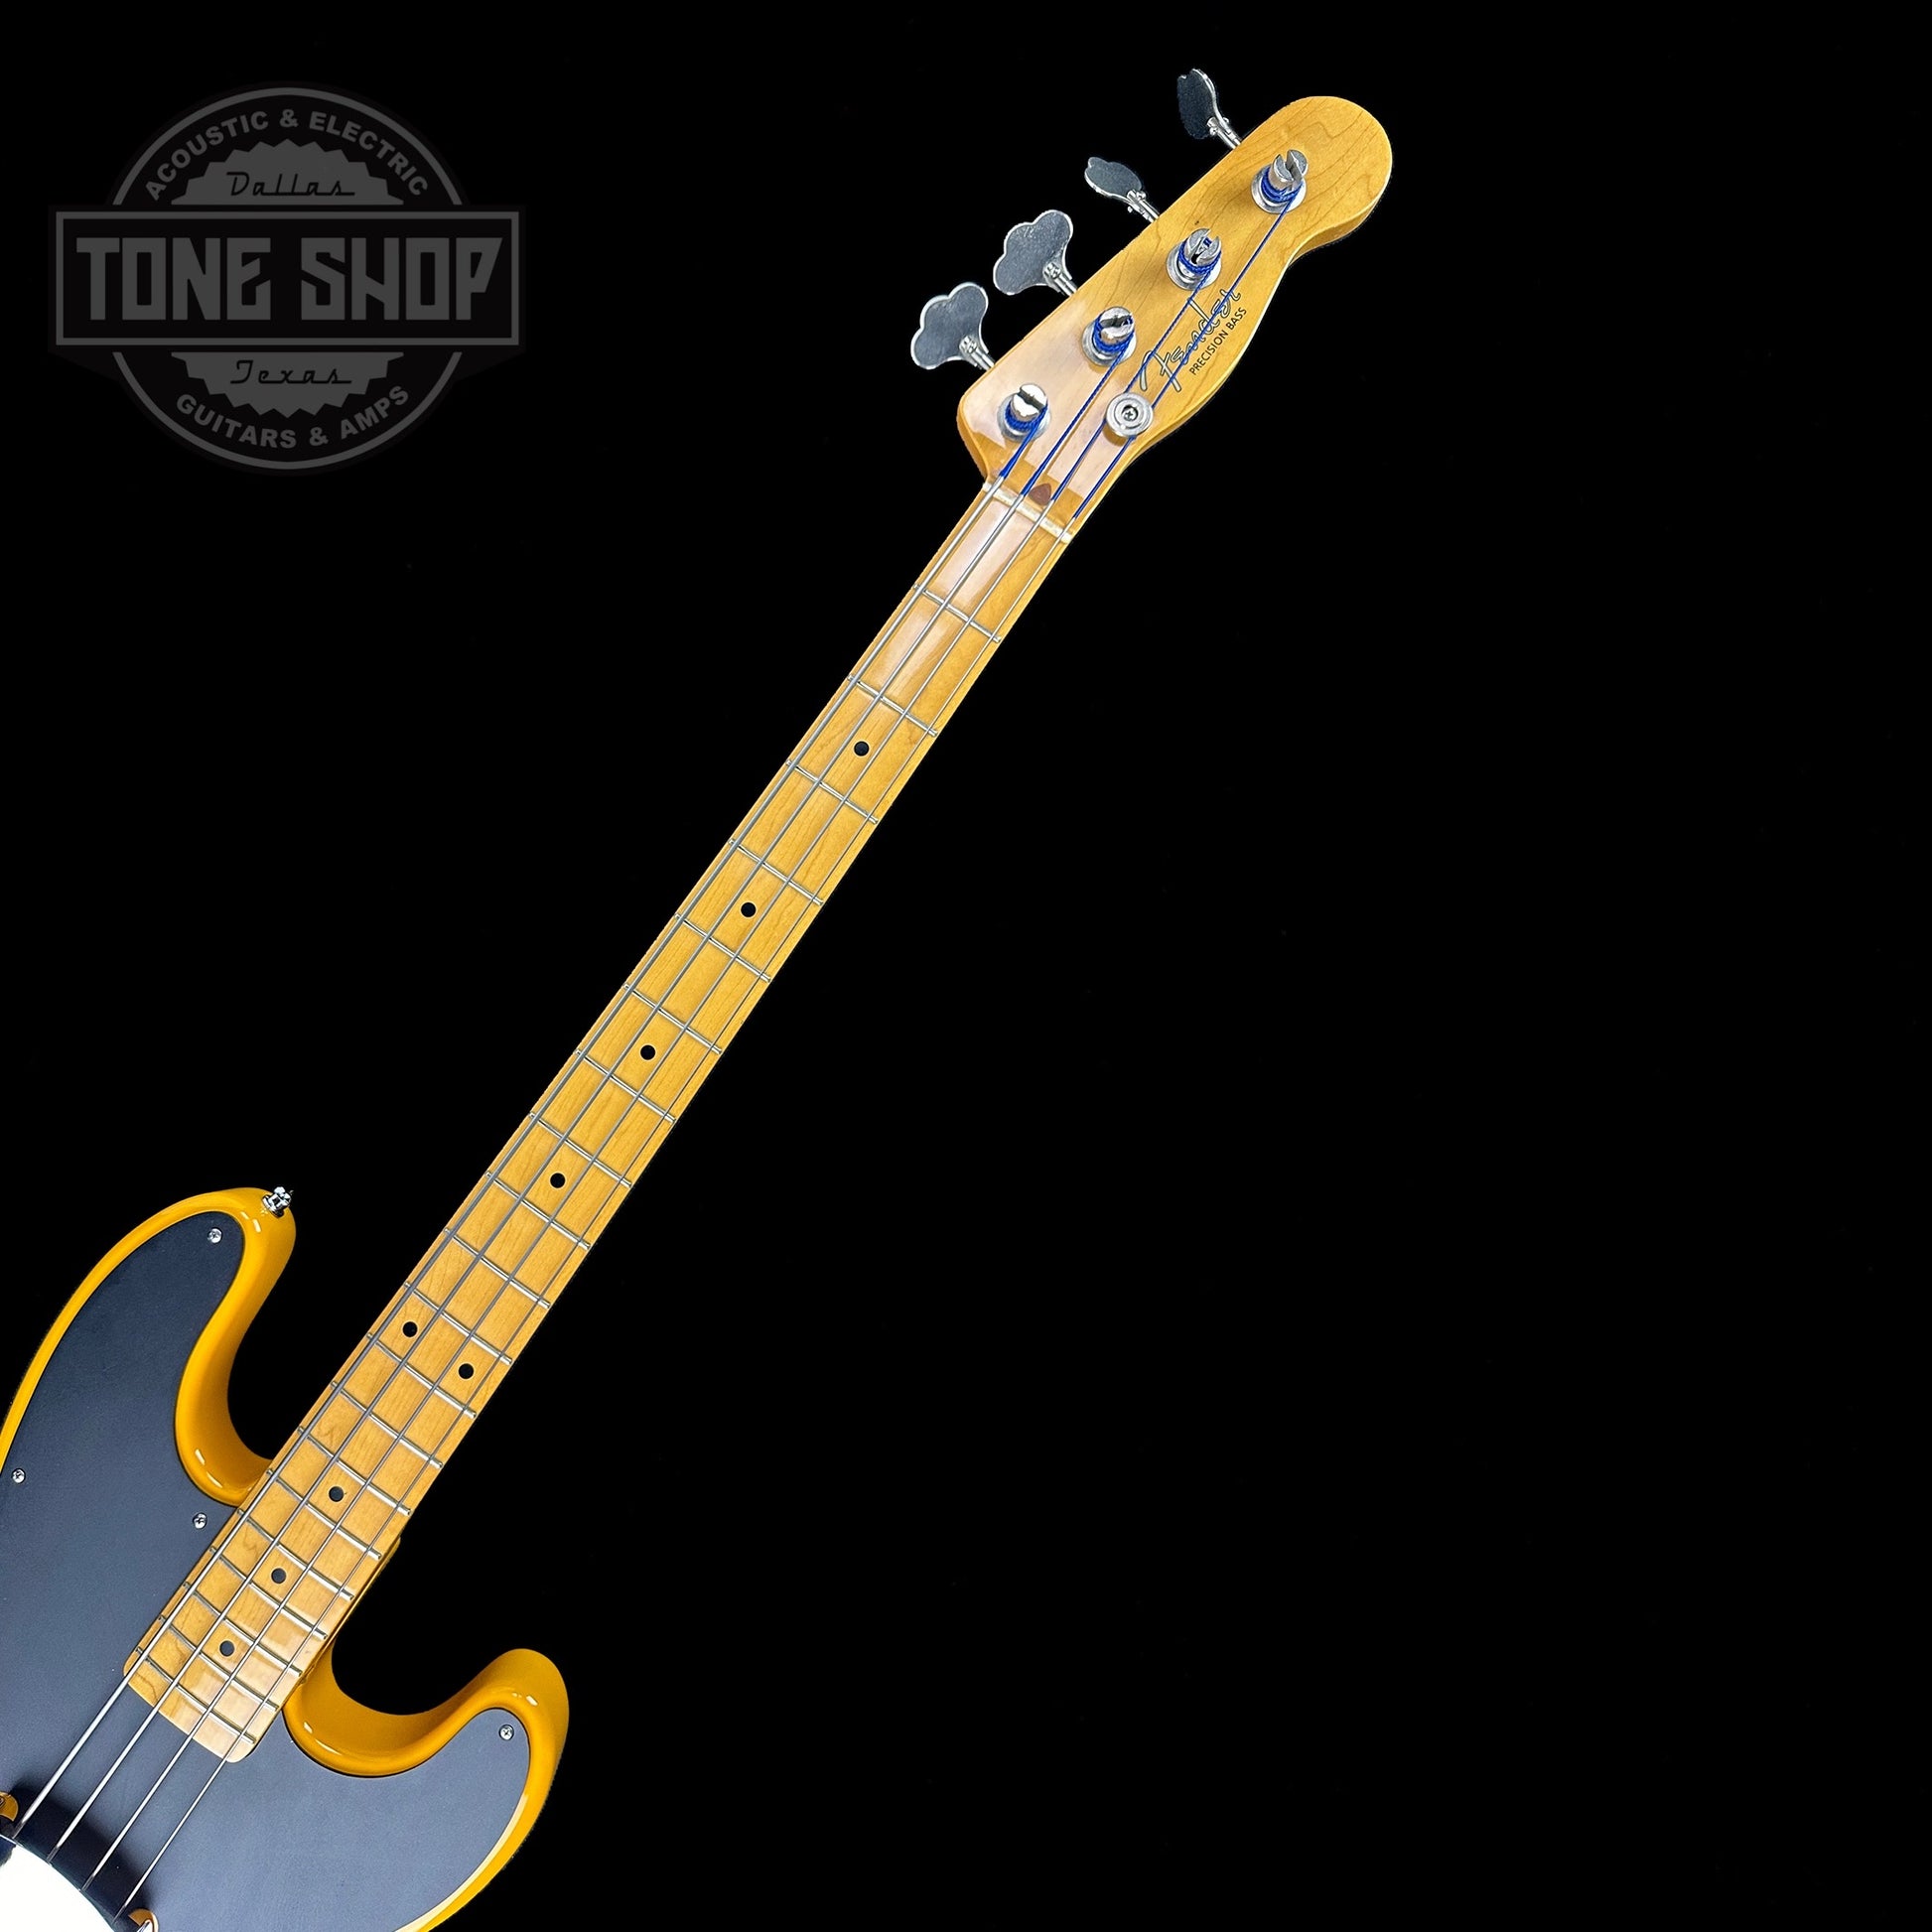 Fretboard of Used Fender CIJ '51 Precision Bass.